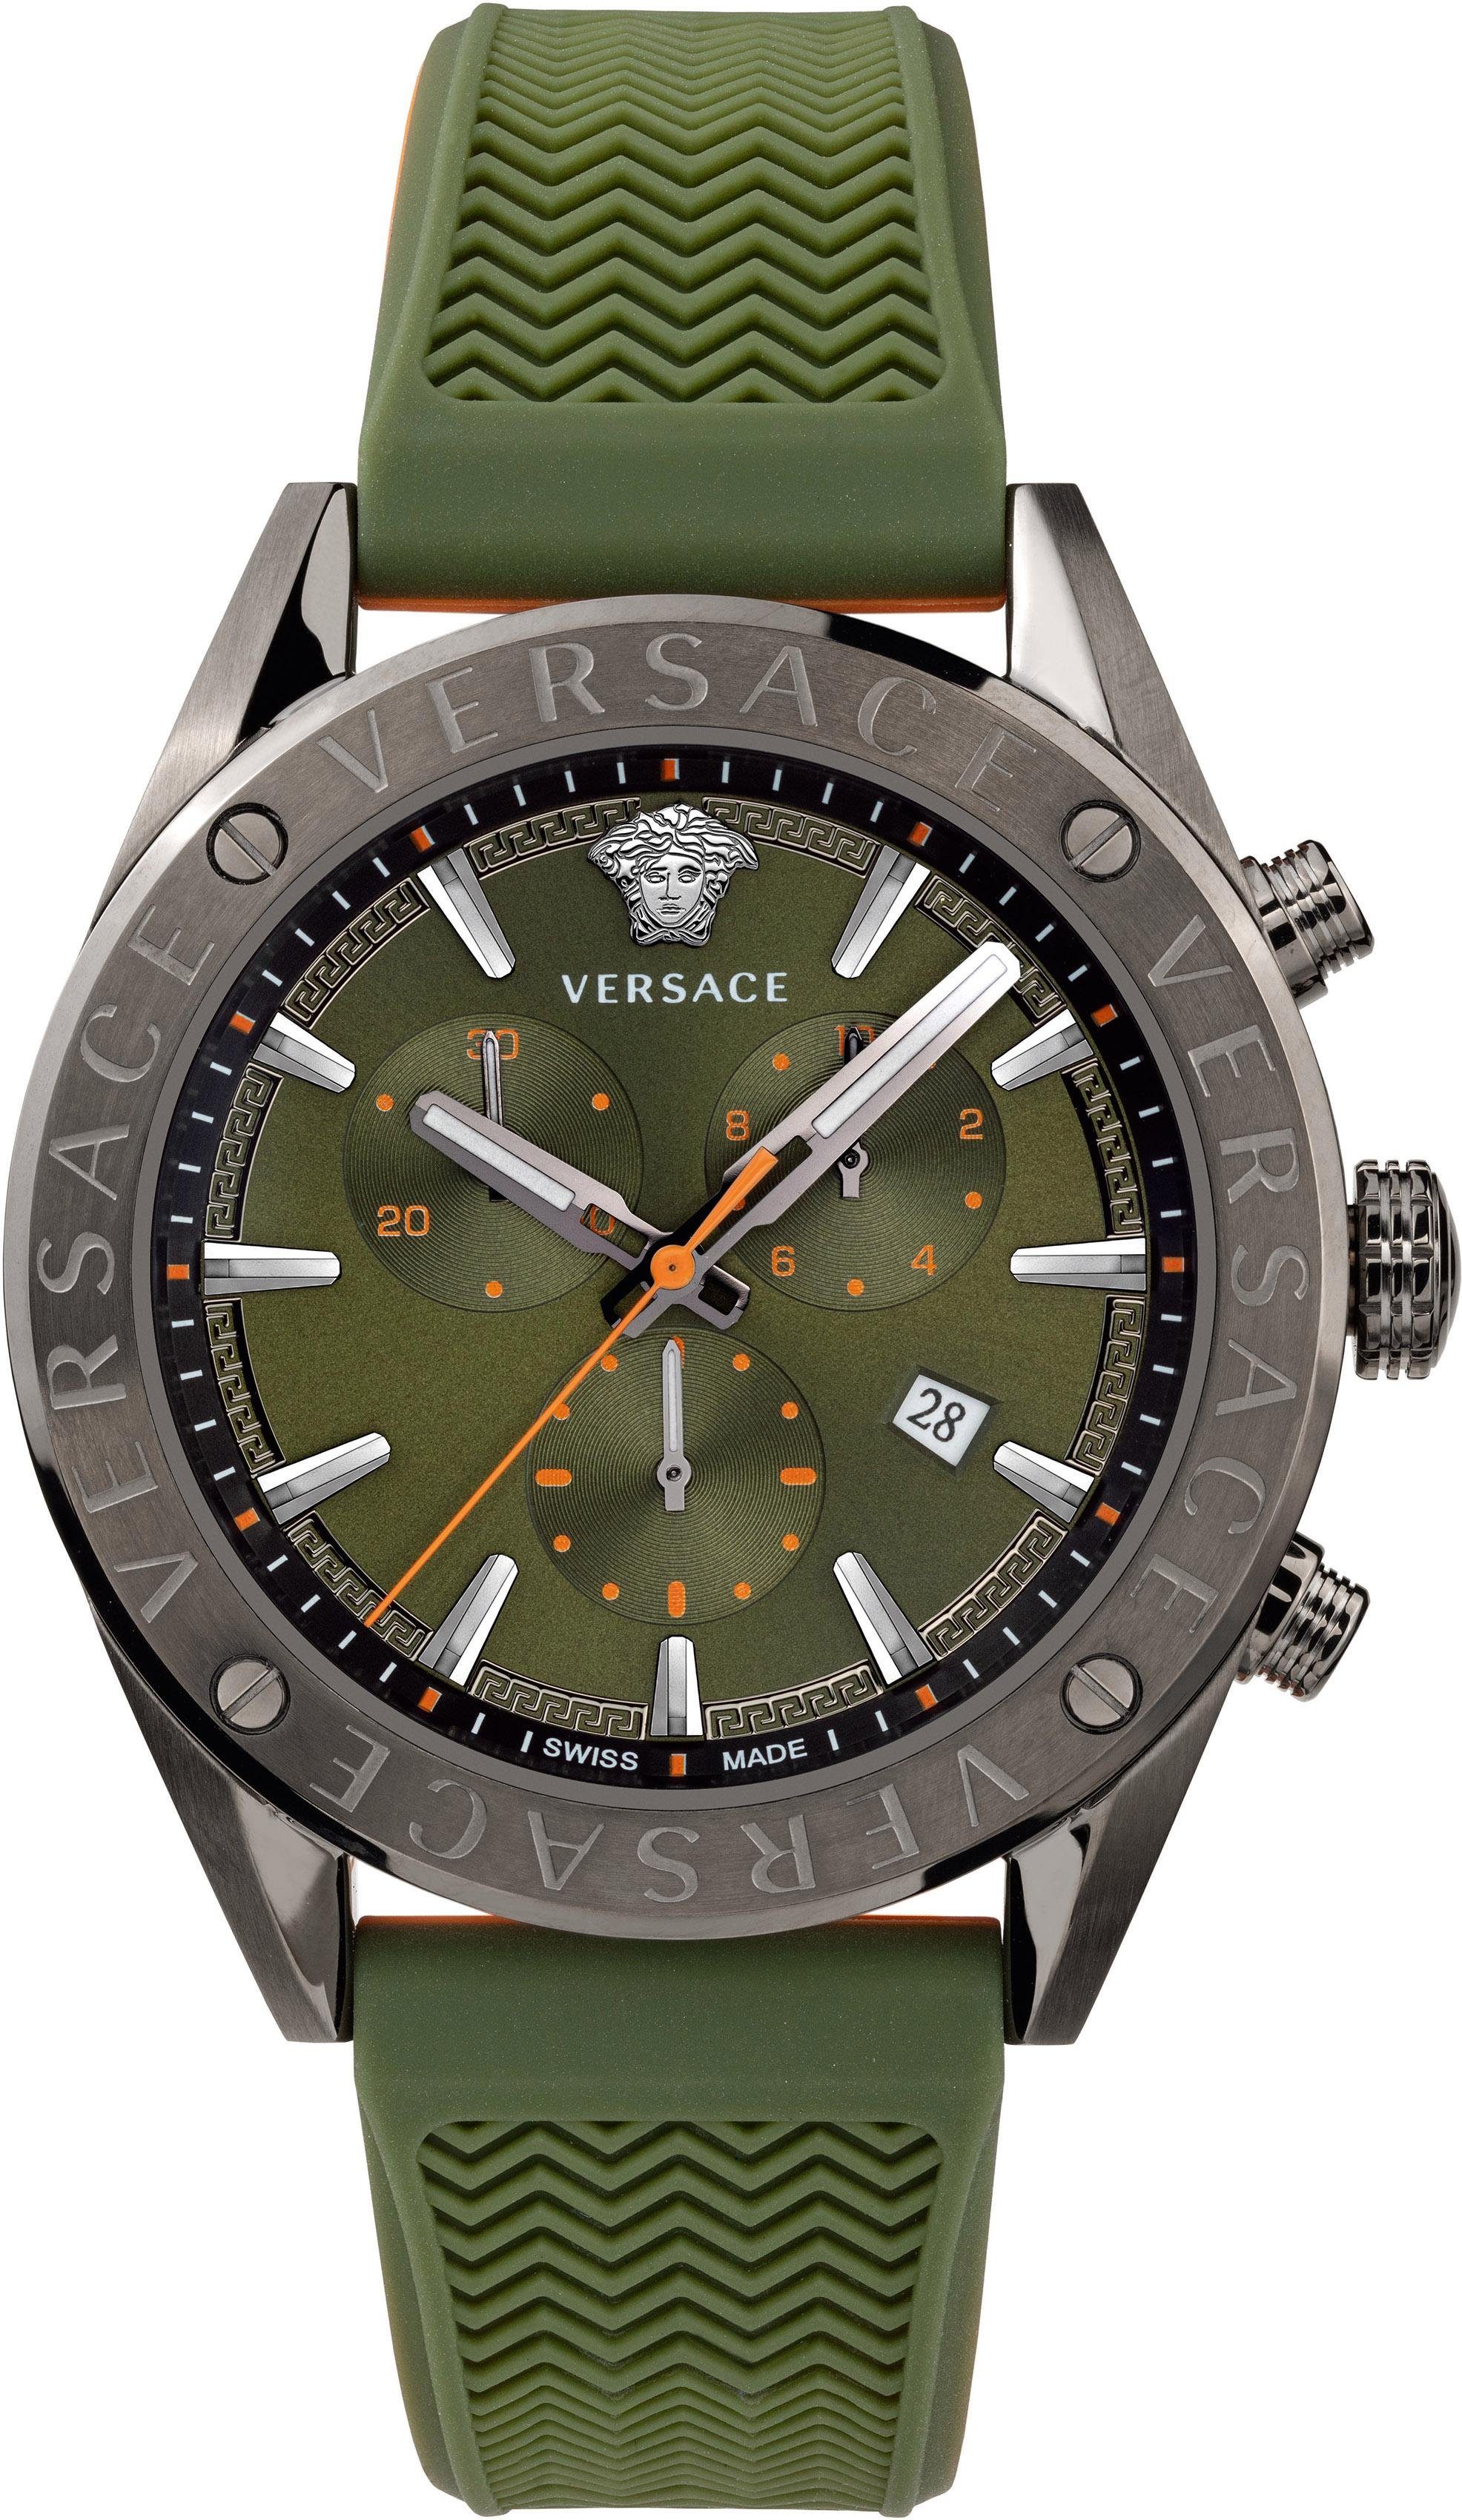 Versace Chronograph »V-Chrono, VEHB00319« kaufen | OTTO